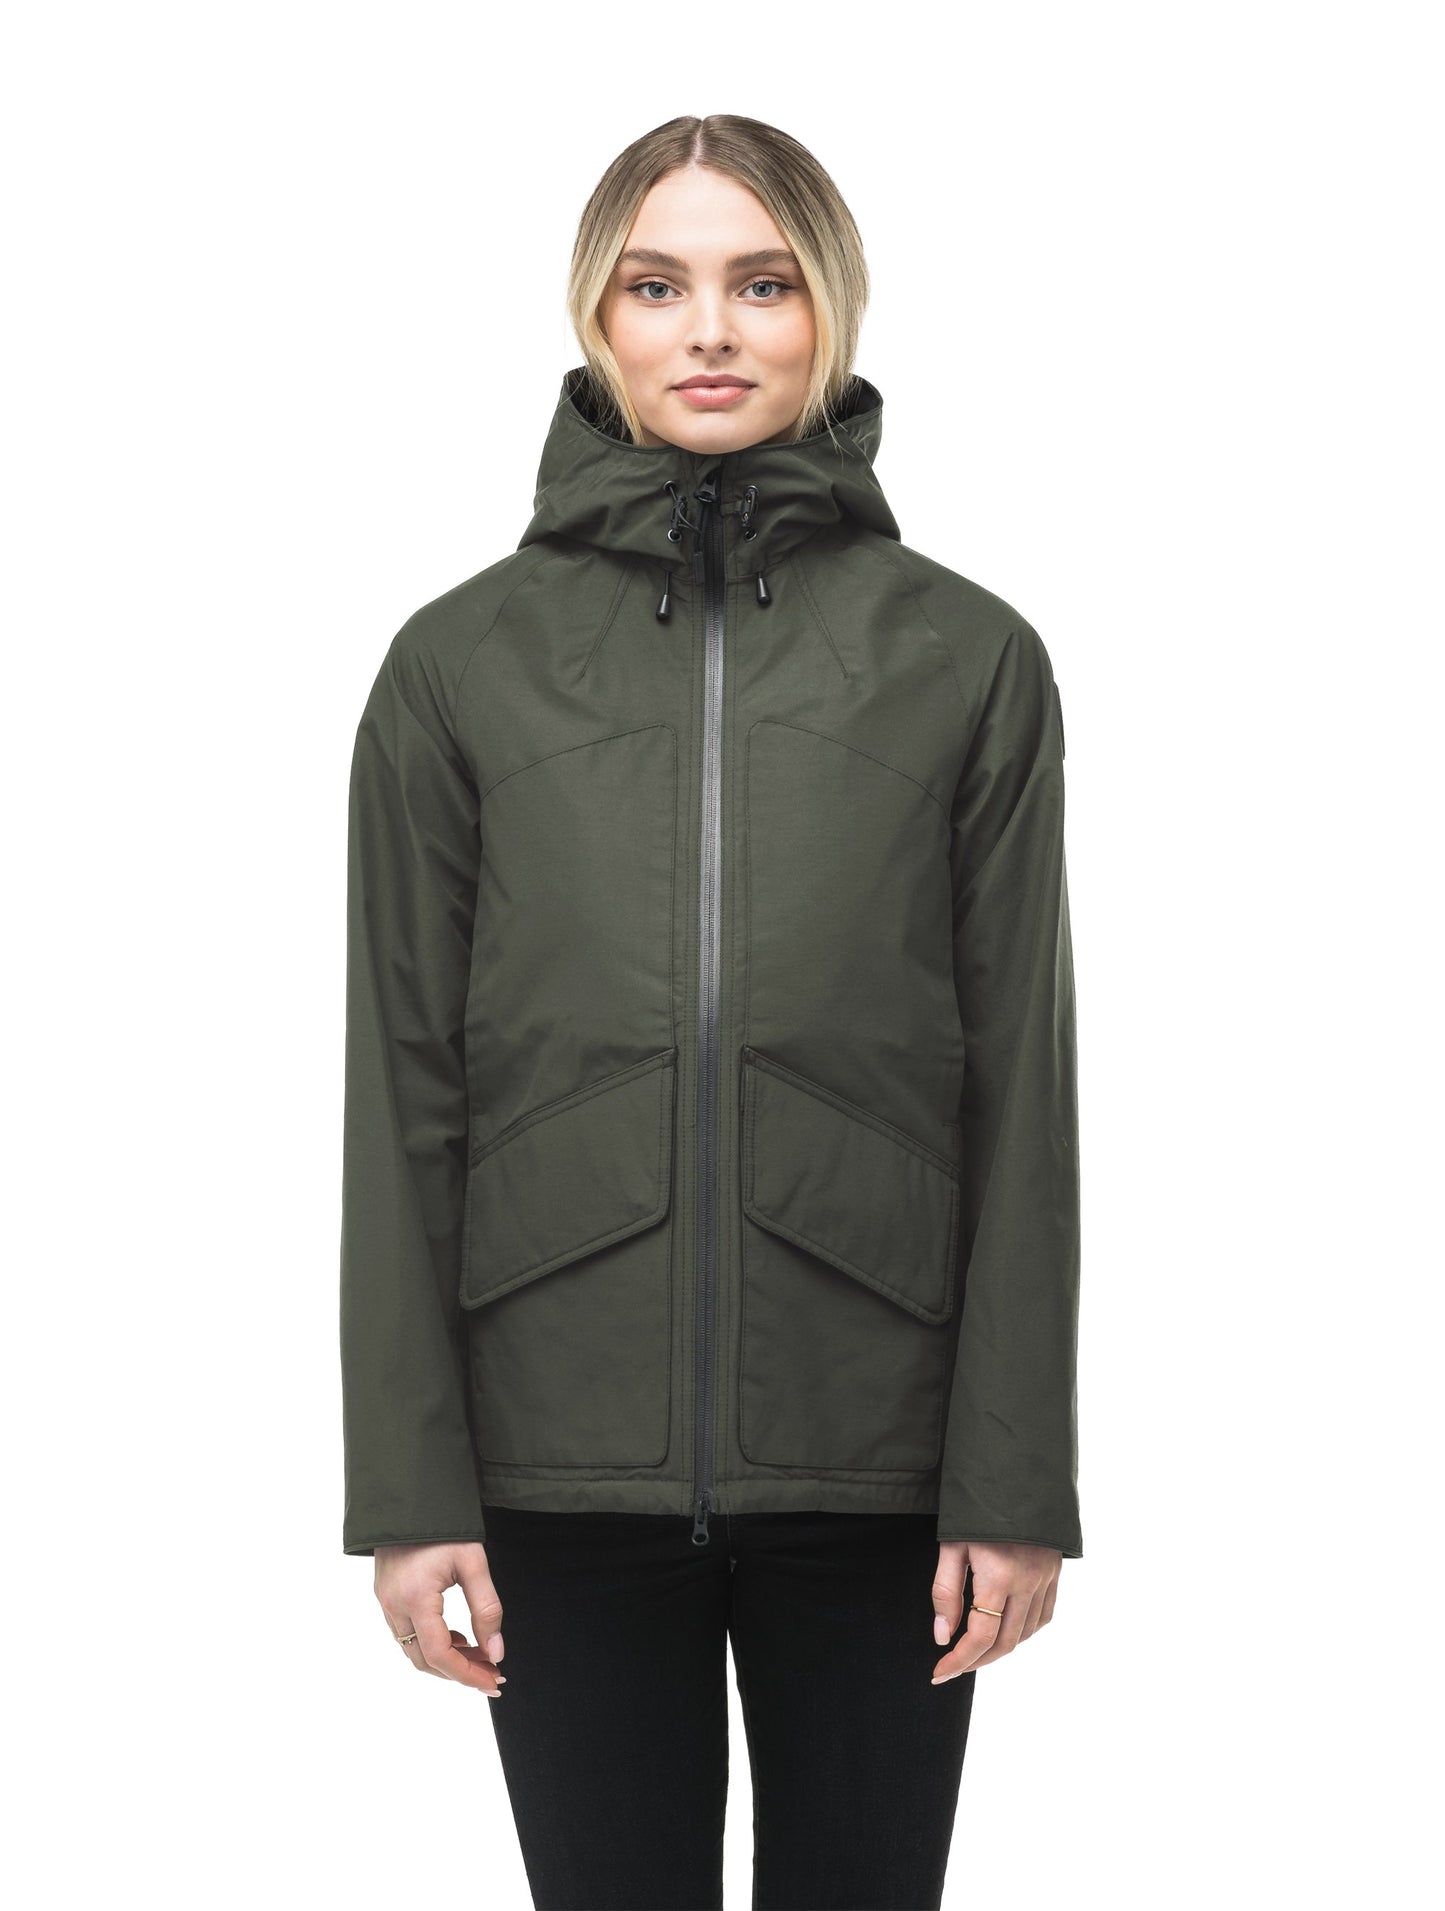 Women's hooded rain jacket with high low hem in Dark Forest